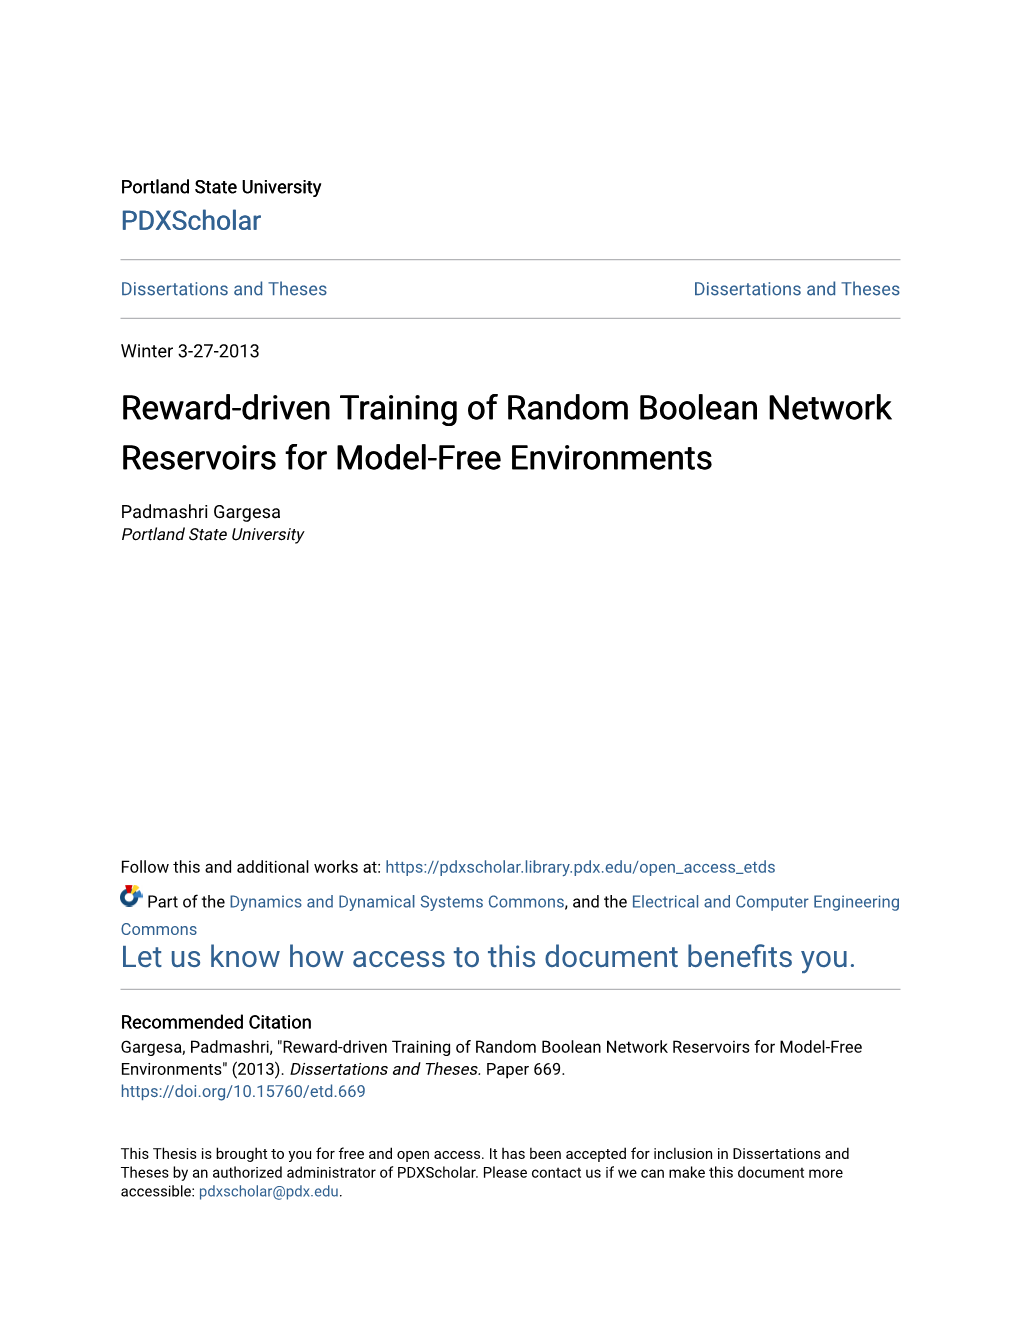 Reward-Driven Training of Random Boolean Network Reservoirs for Model-Free Environments